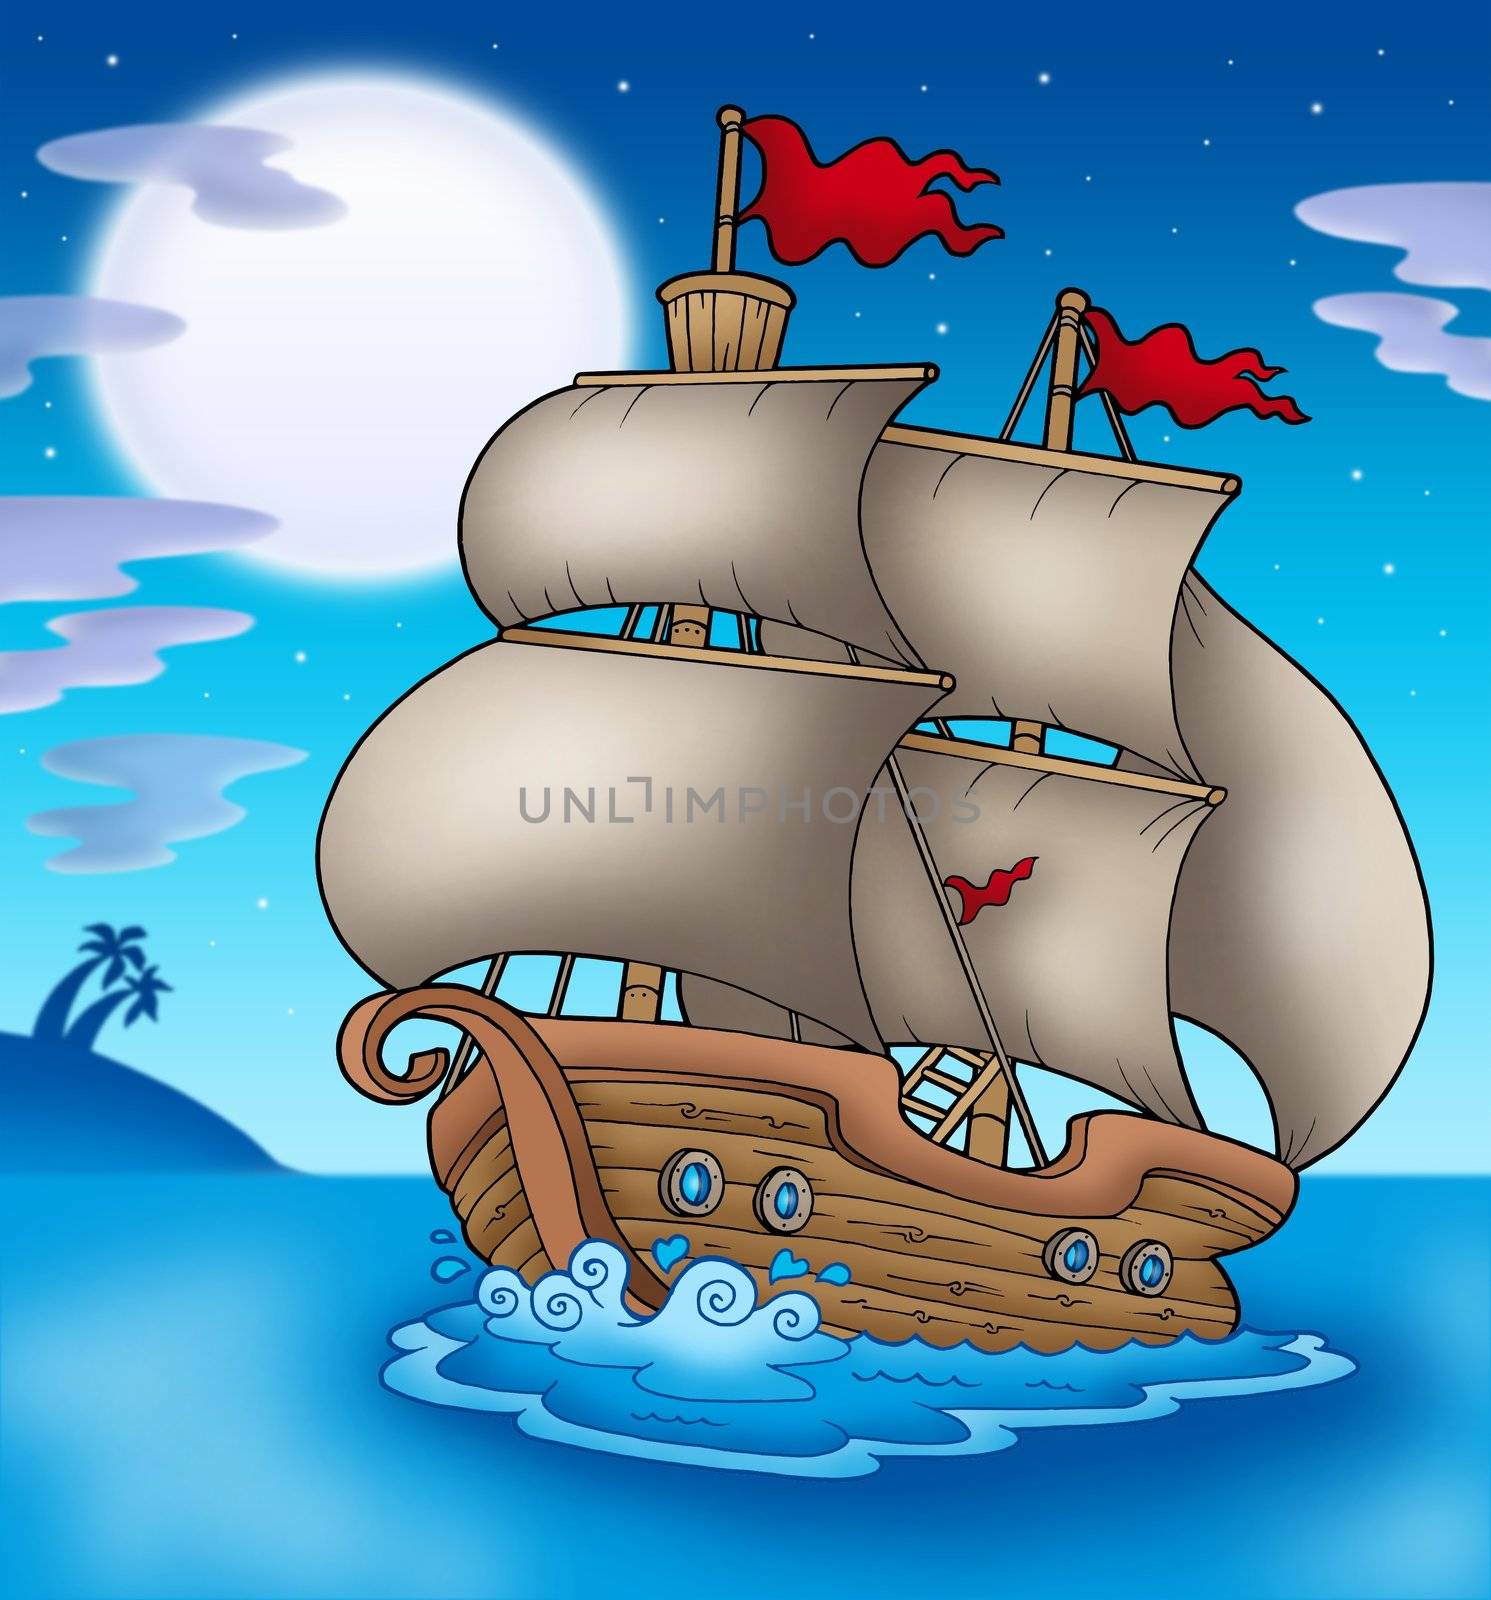 Old boat sailing sea at night - color illustration.